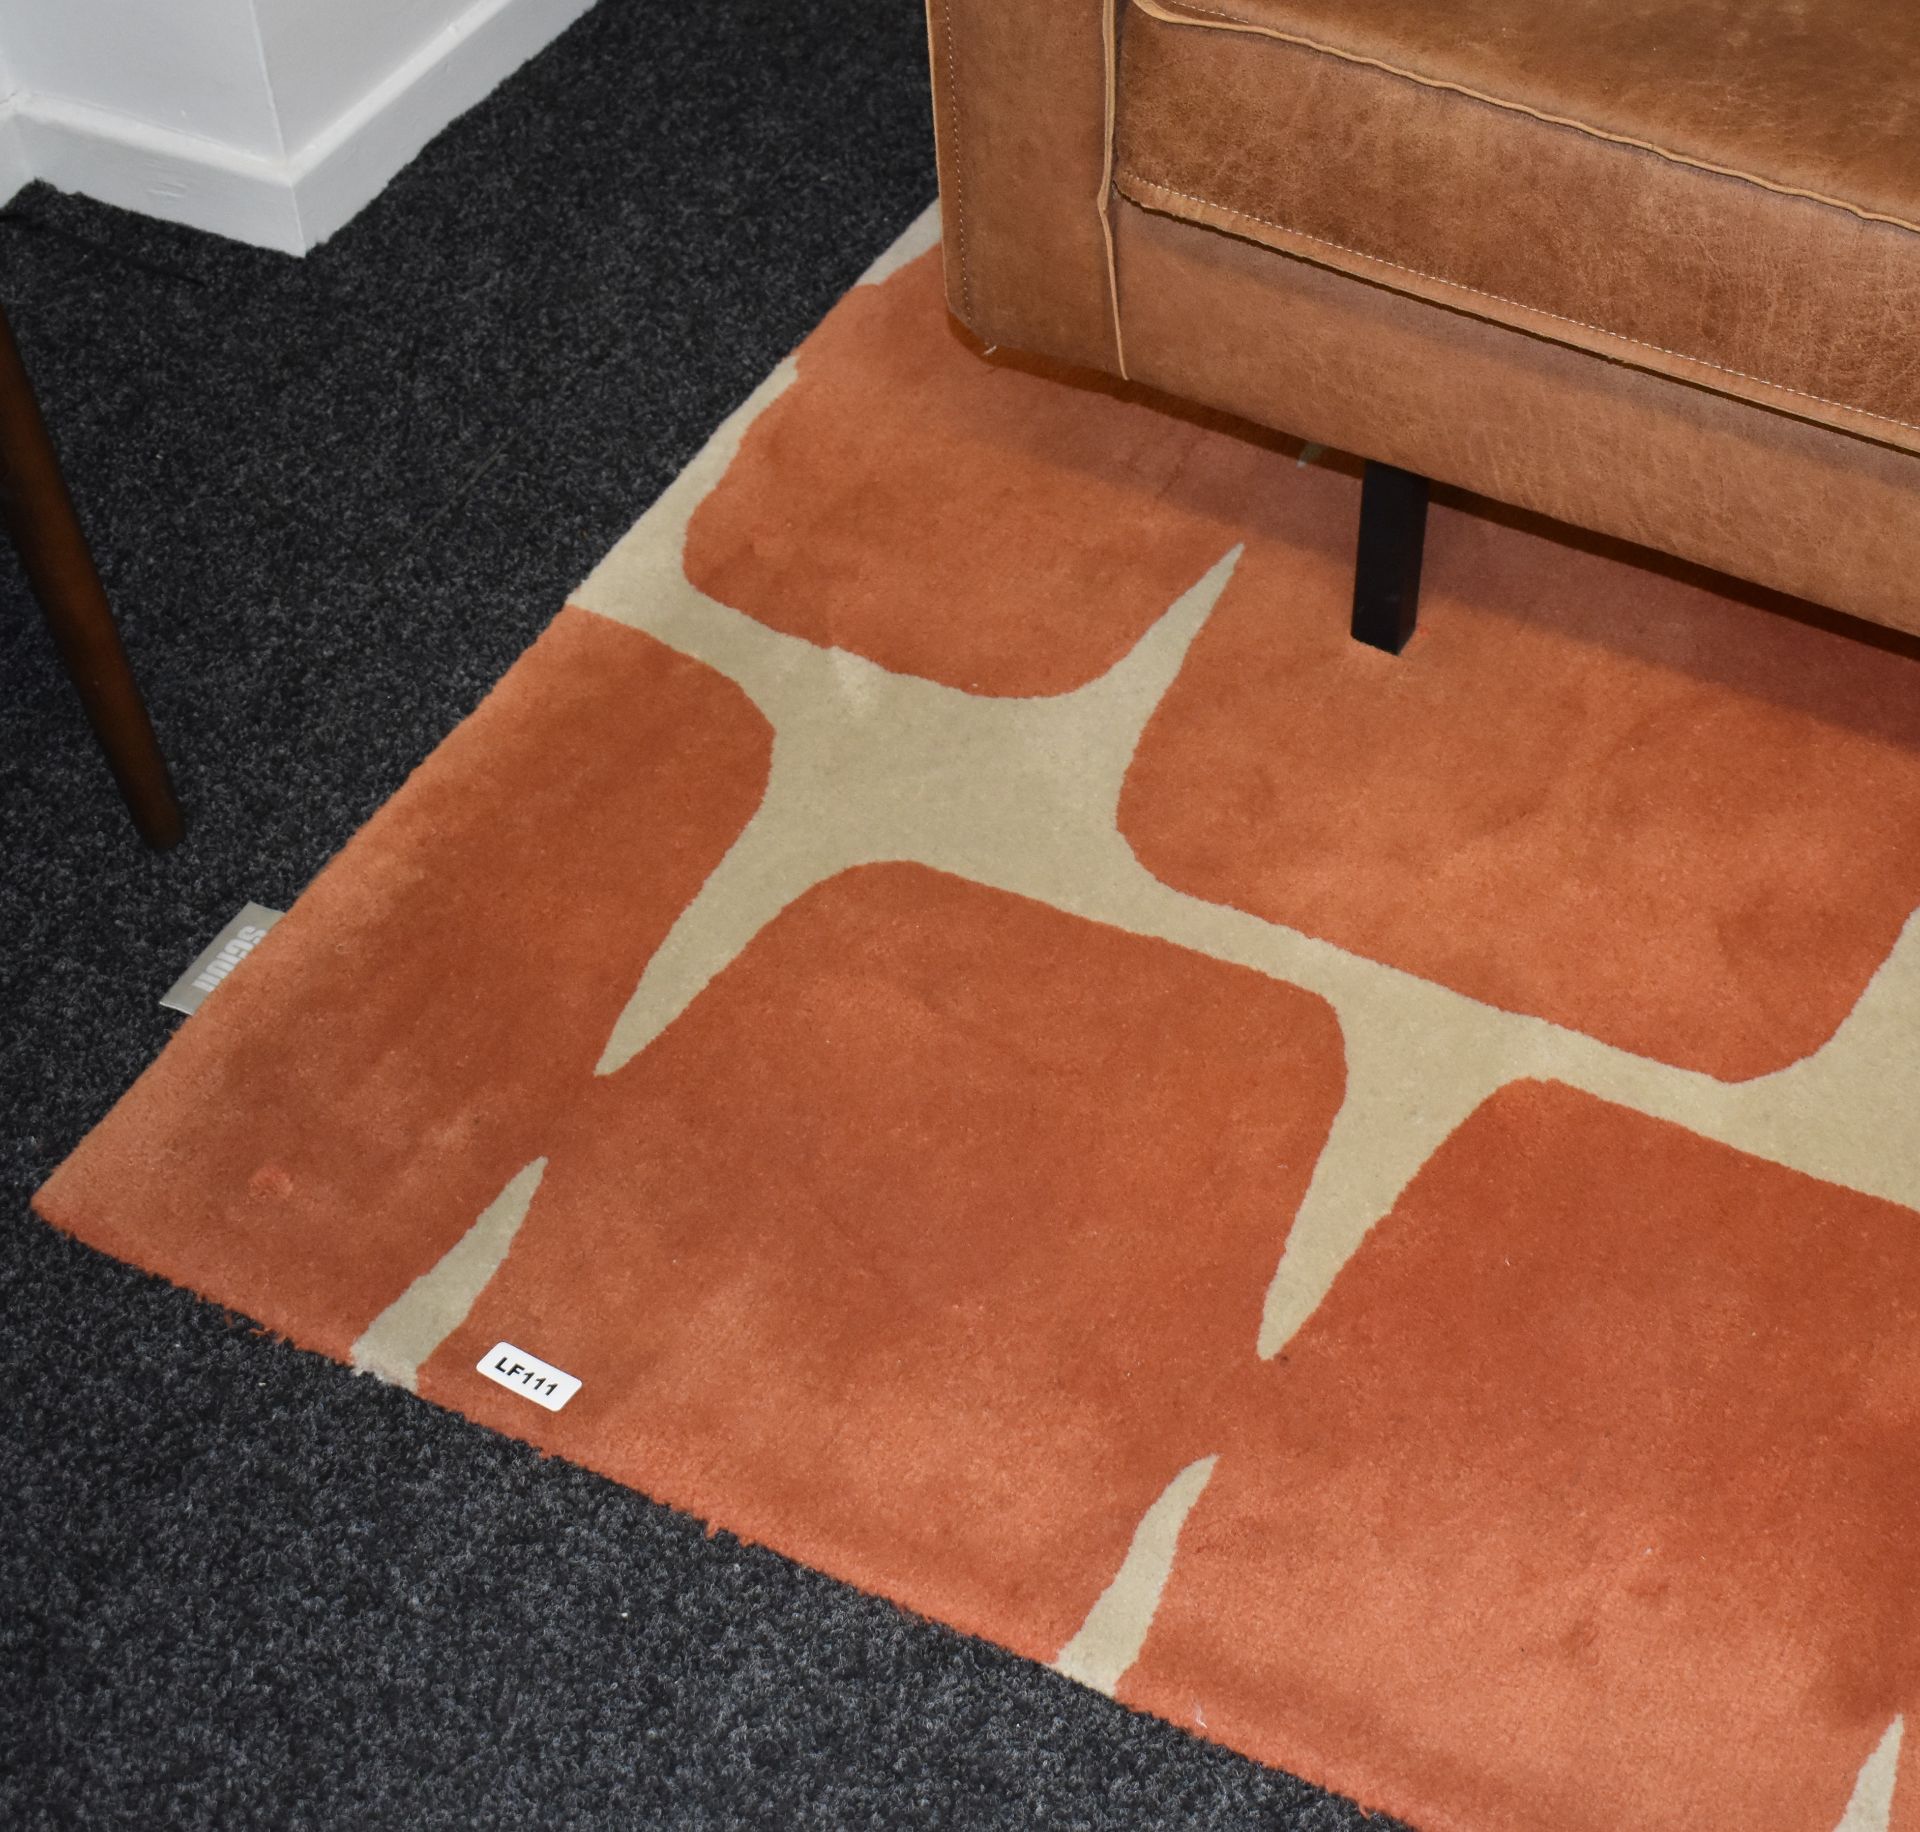 1 x Scion Lohko Poppy Designer Handmade Carpet Rug - Made From 100% Wool Yarn - 140 x 200 cms - Image 4 of 6